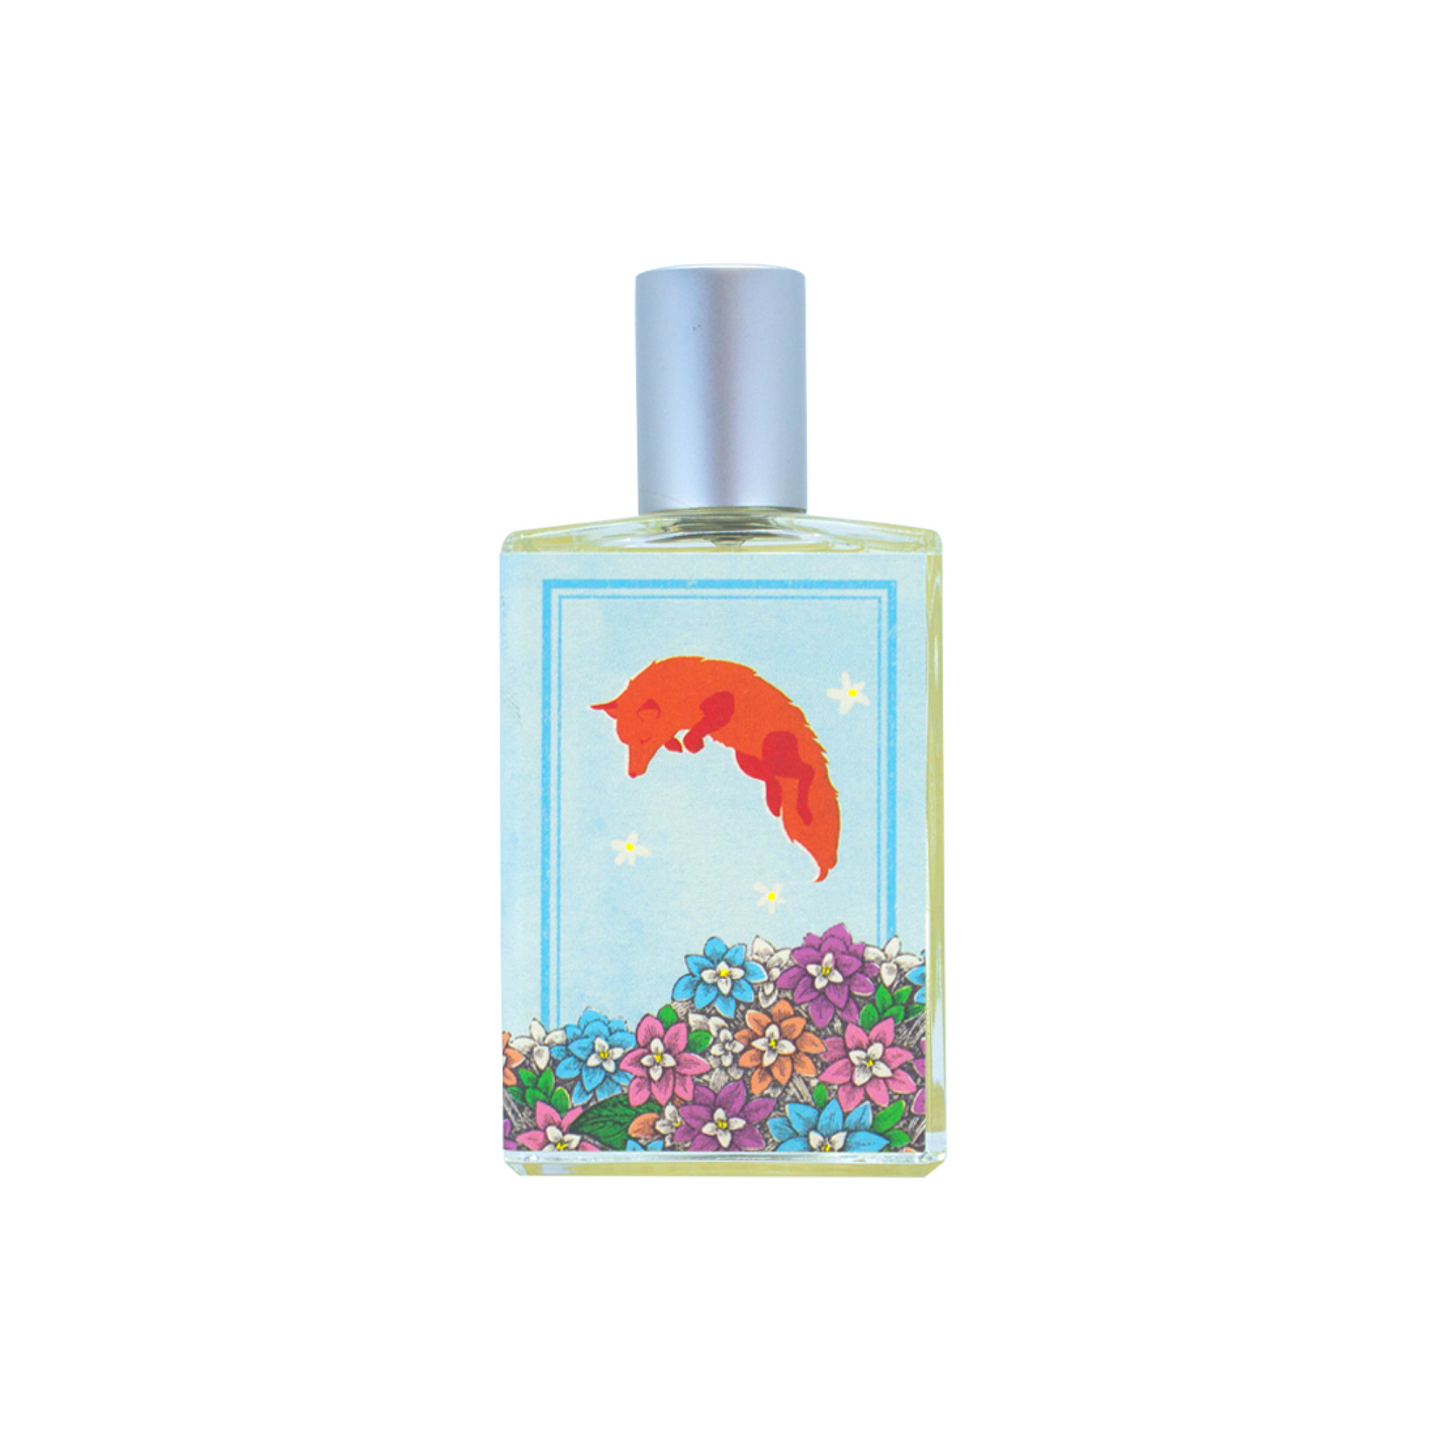 Fox in the Flowerbed .5 oz Eau de Parfum - Travel Spray